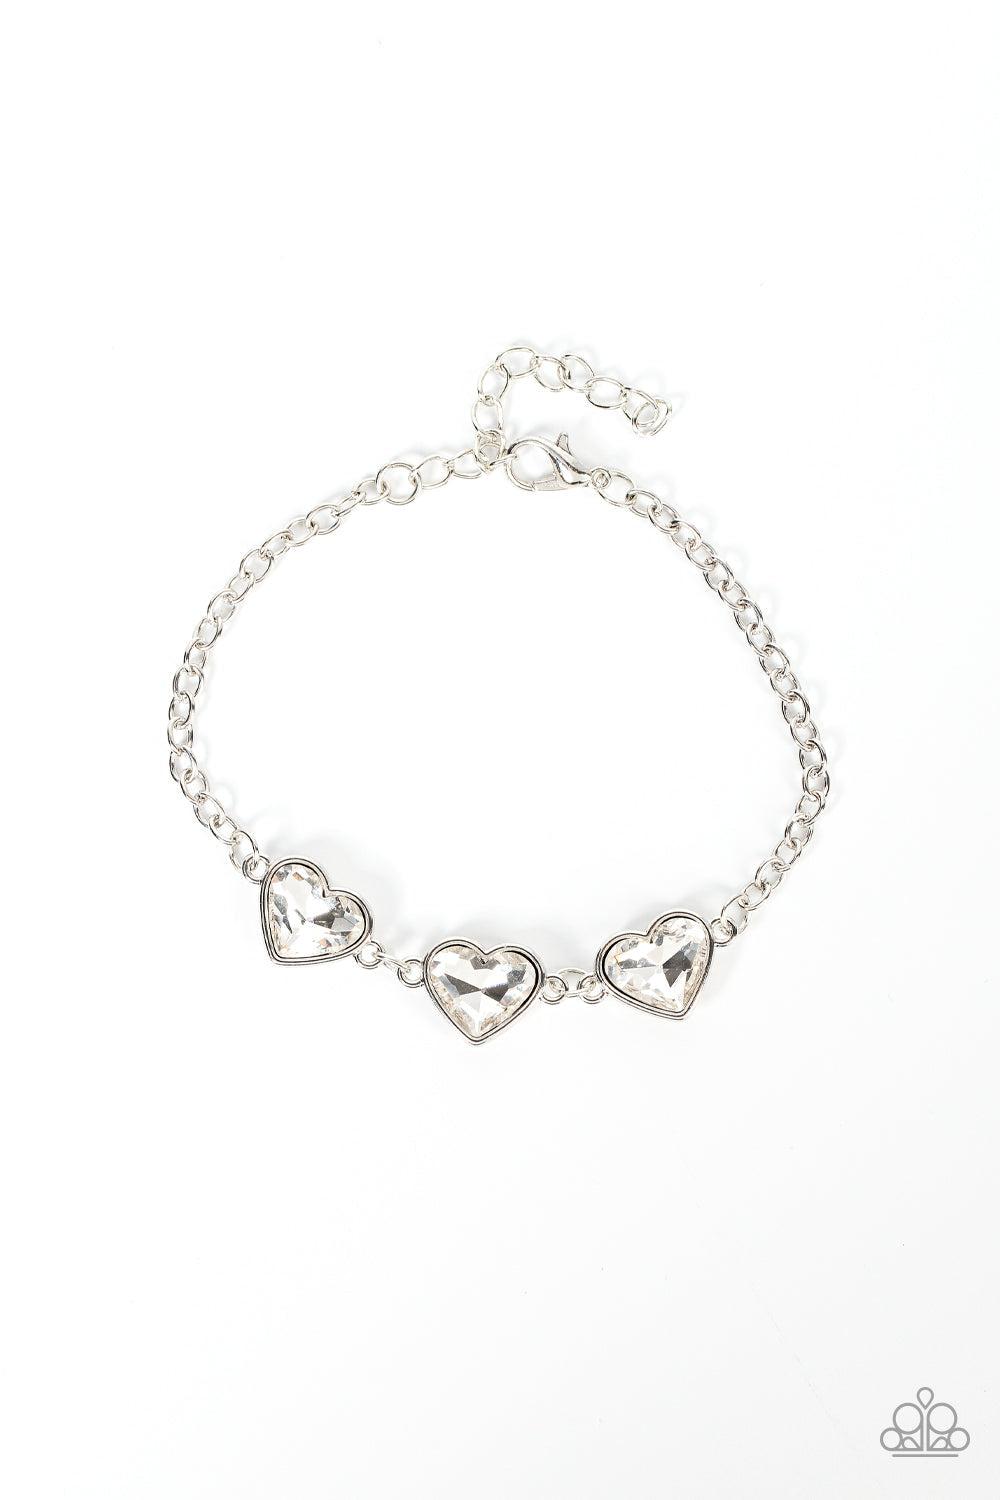 Little Heartbreaker White Rhinestone Heart Bracelet - Paparazzi Accessories- lightbox - CarasShop.com - $5 Jewelry by Cara Jewels